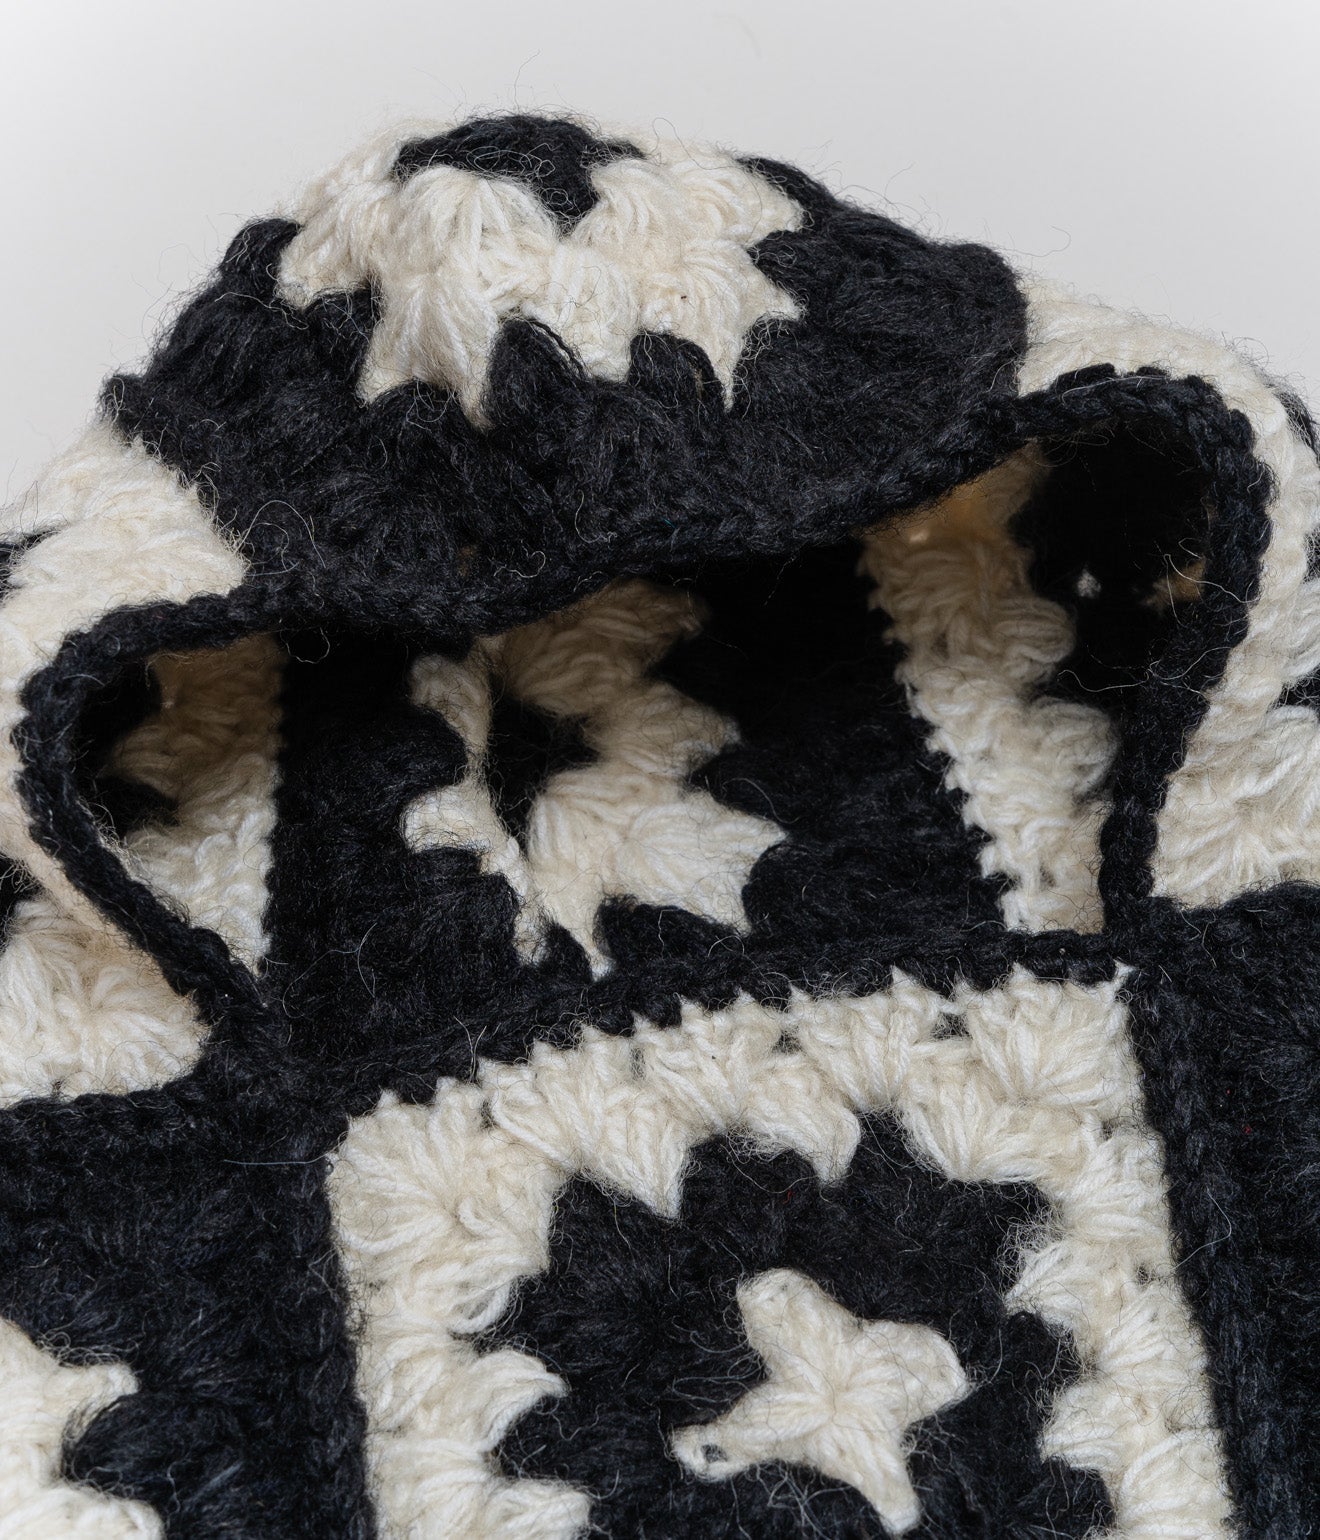 MacMahon Knitting Mills "Balaclava-Crochet" Black/White - WEAREALLANIMALS